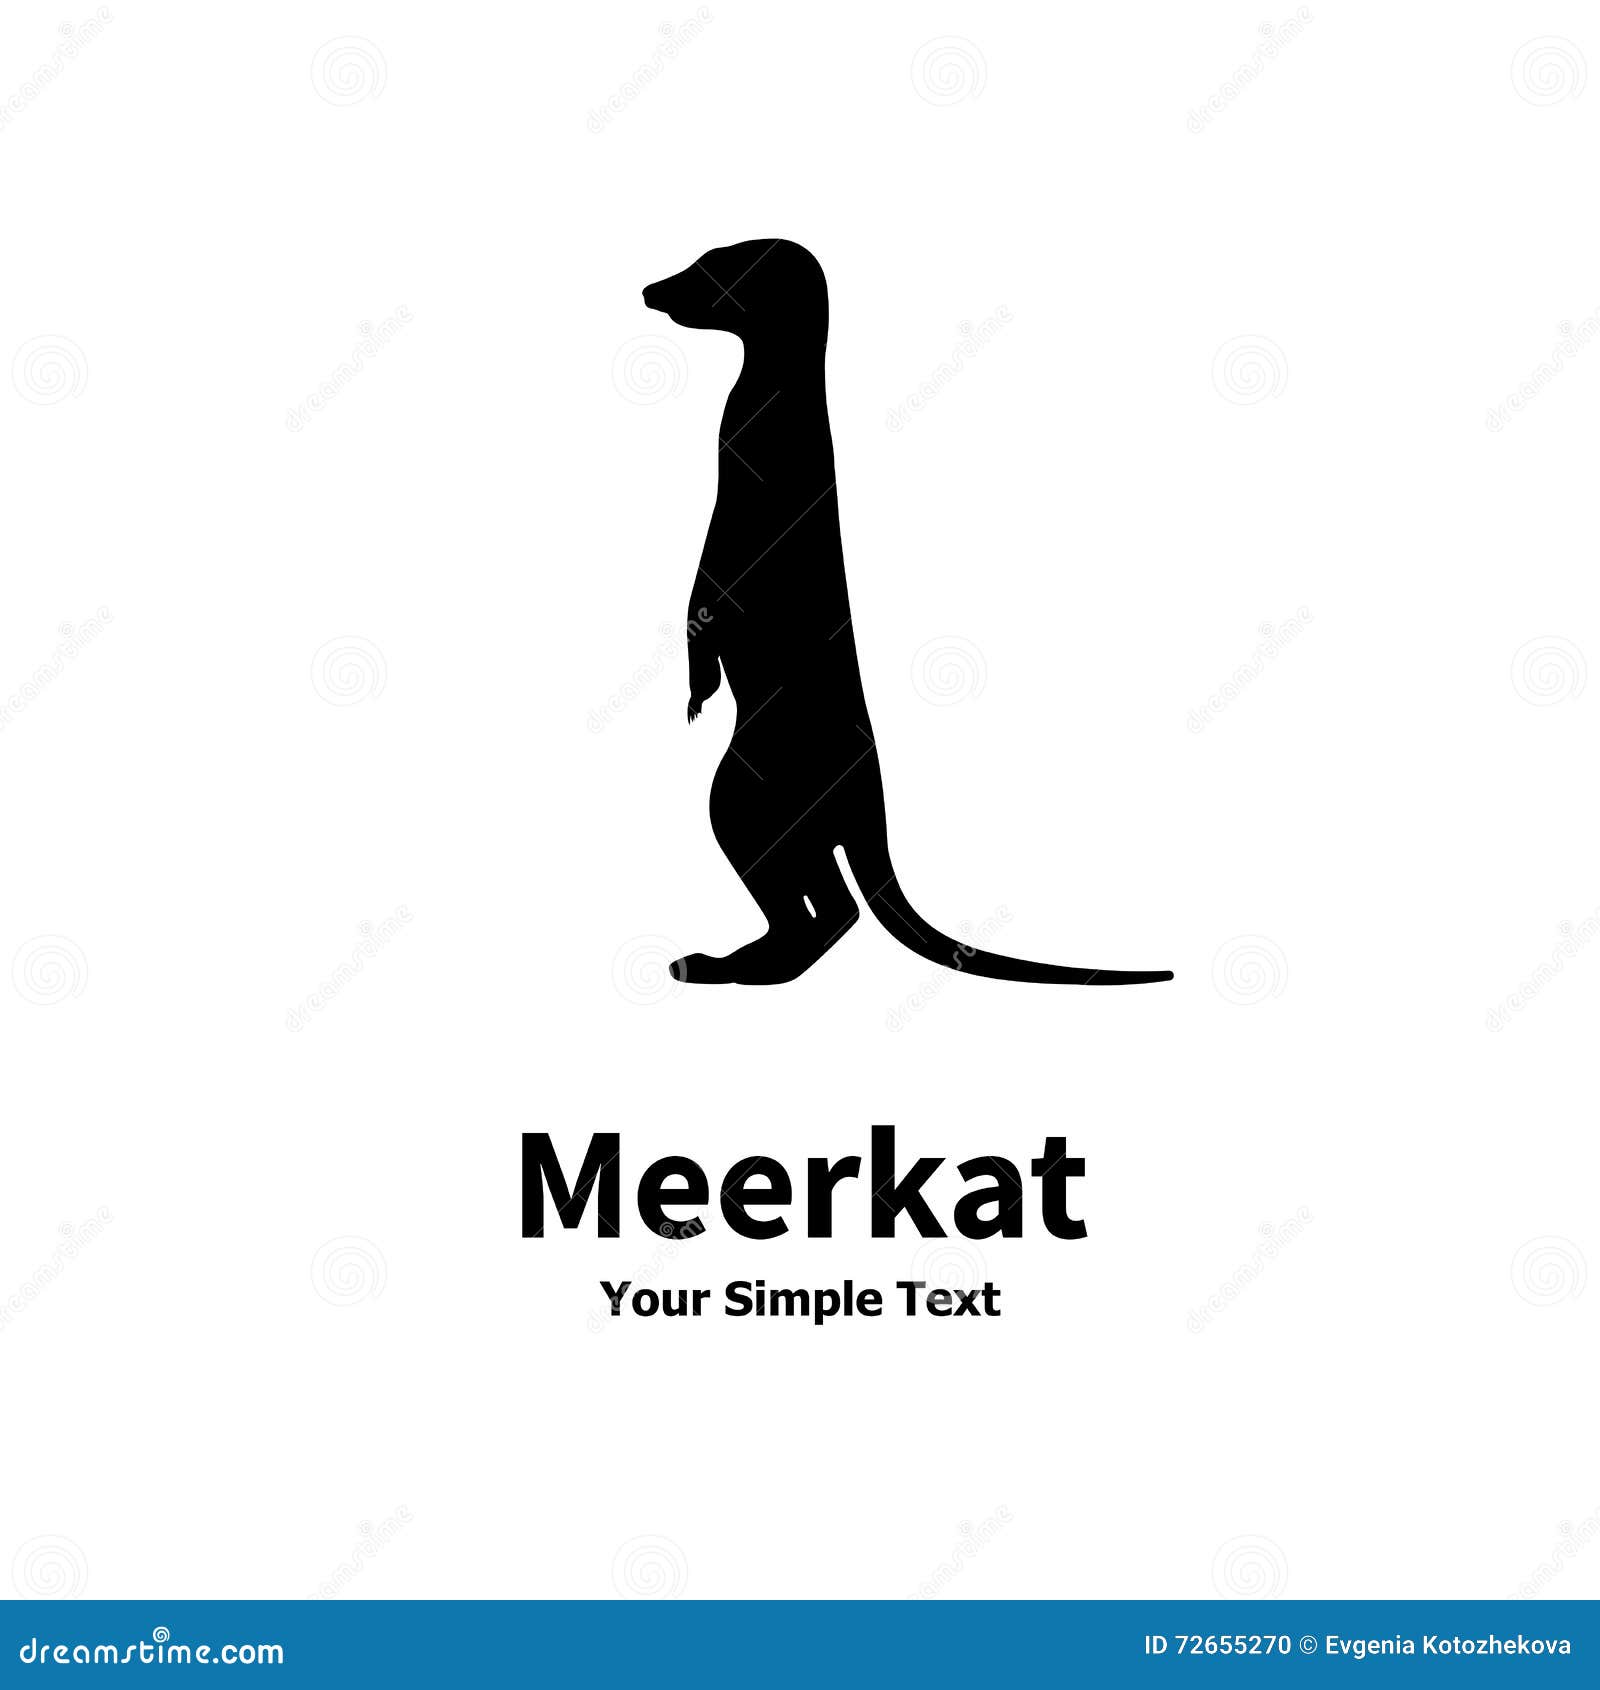   of a silhouette standing meerkat